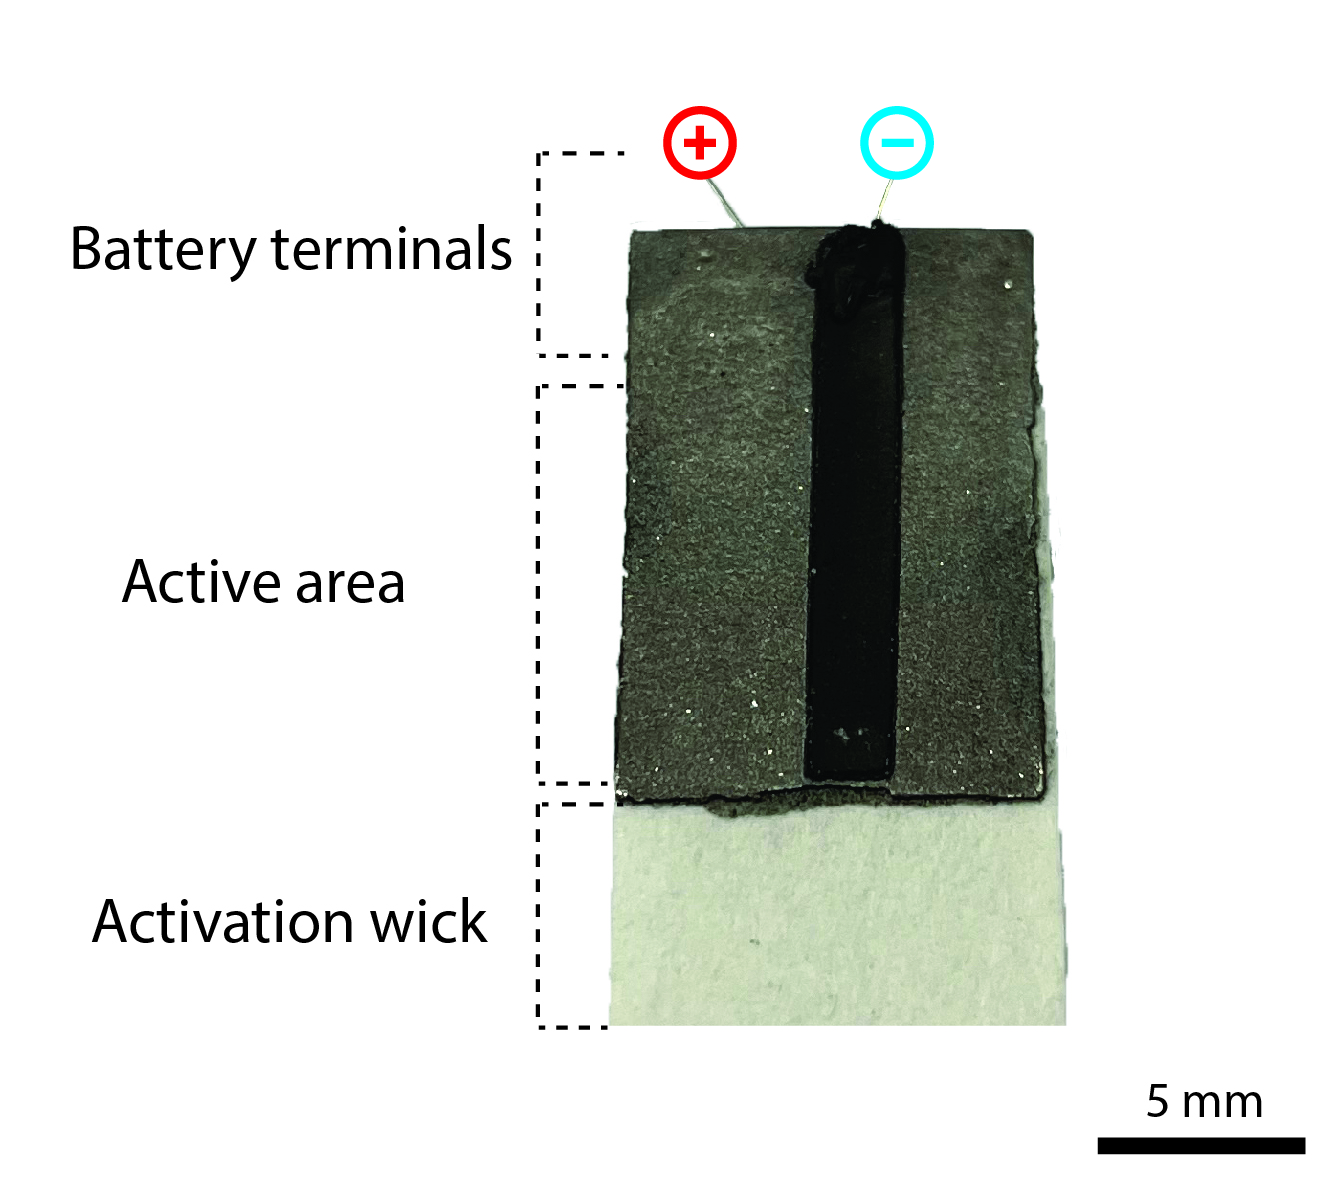 EMPA paper battery